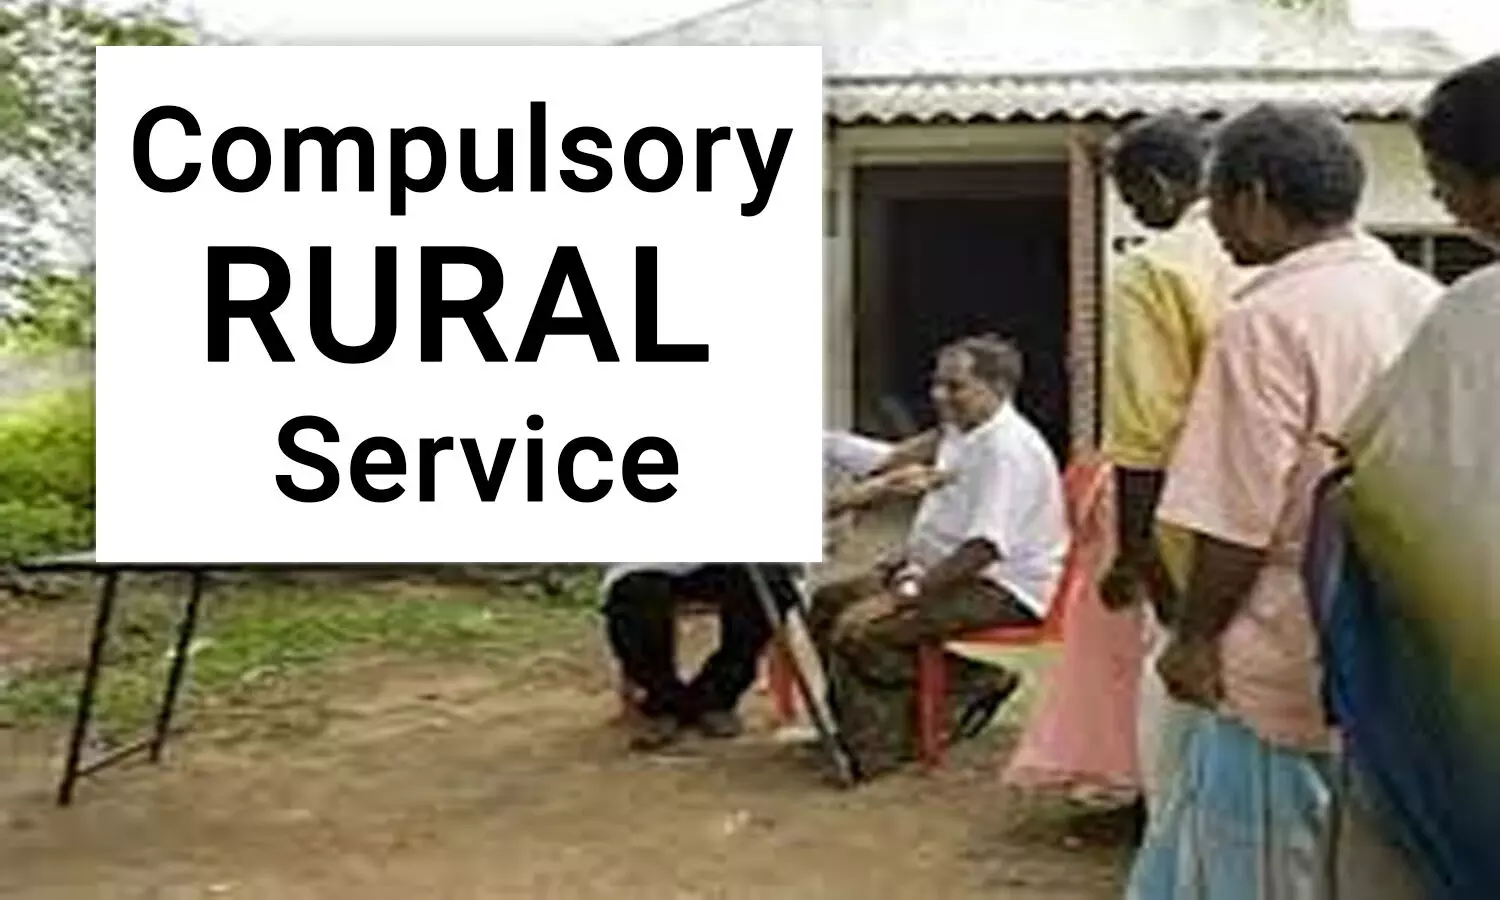 One Year Rural Service Bond for MBBS doctors Reasonable: Karnataka High Court